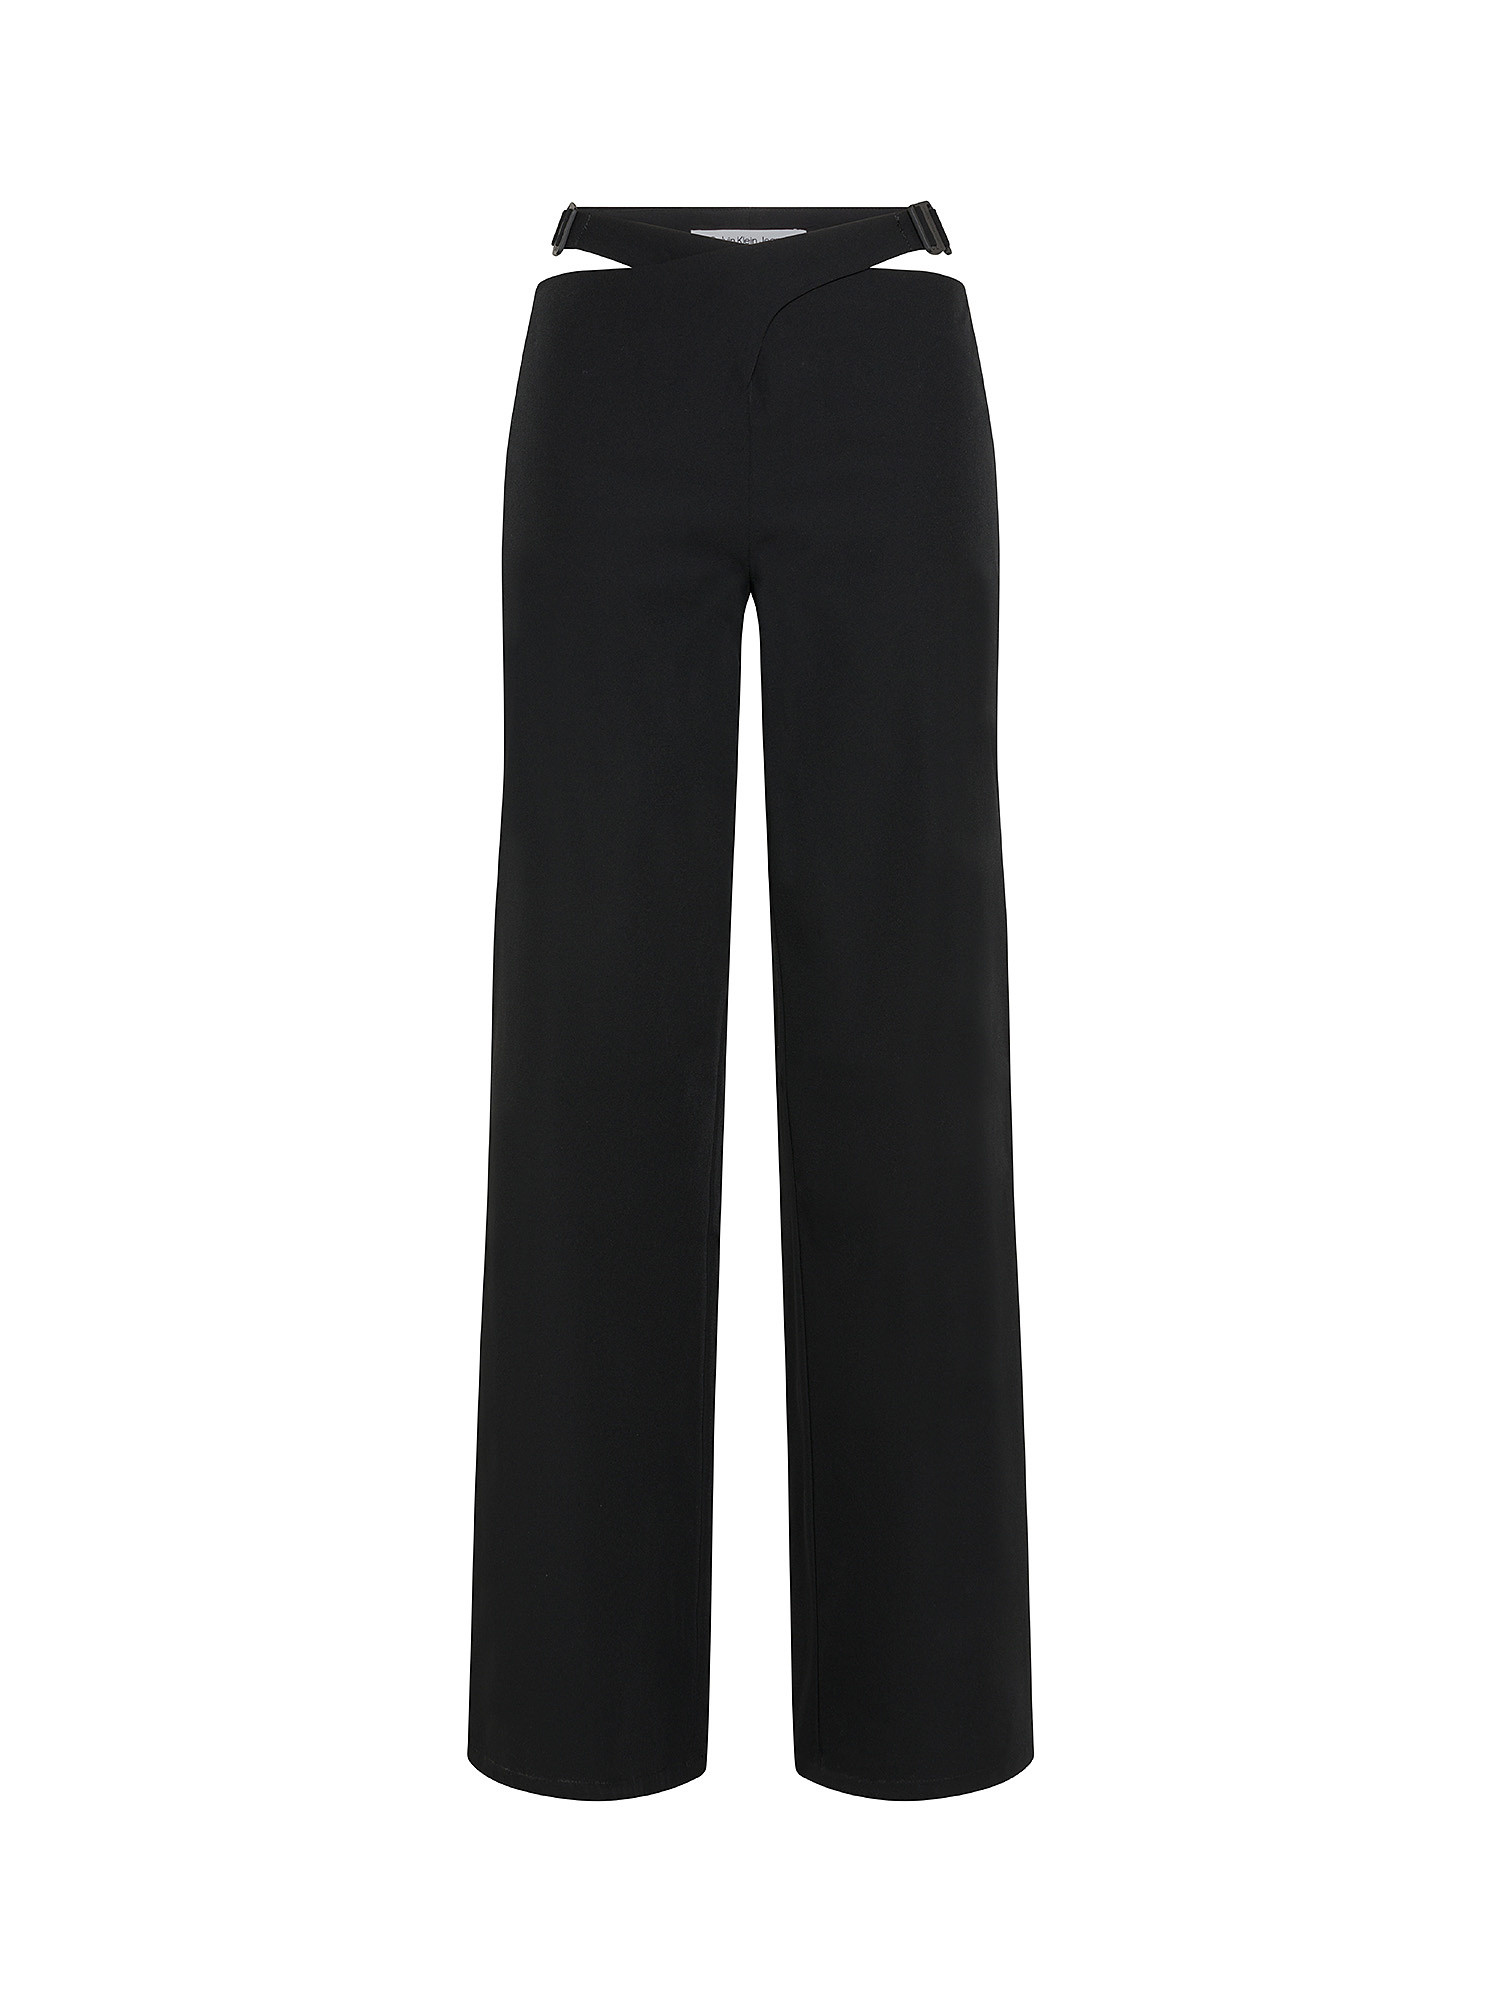 Calvin Klein Jeans - Pantaloni Cut-Out, Nero, large image number 0